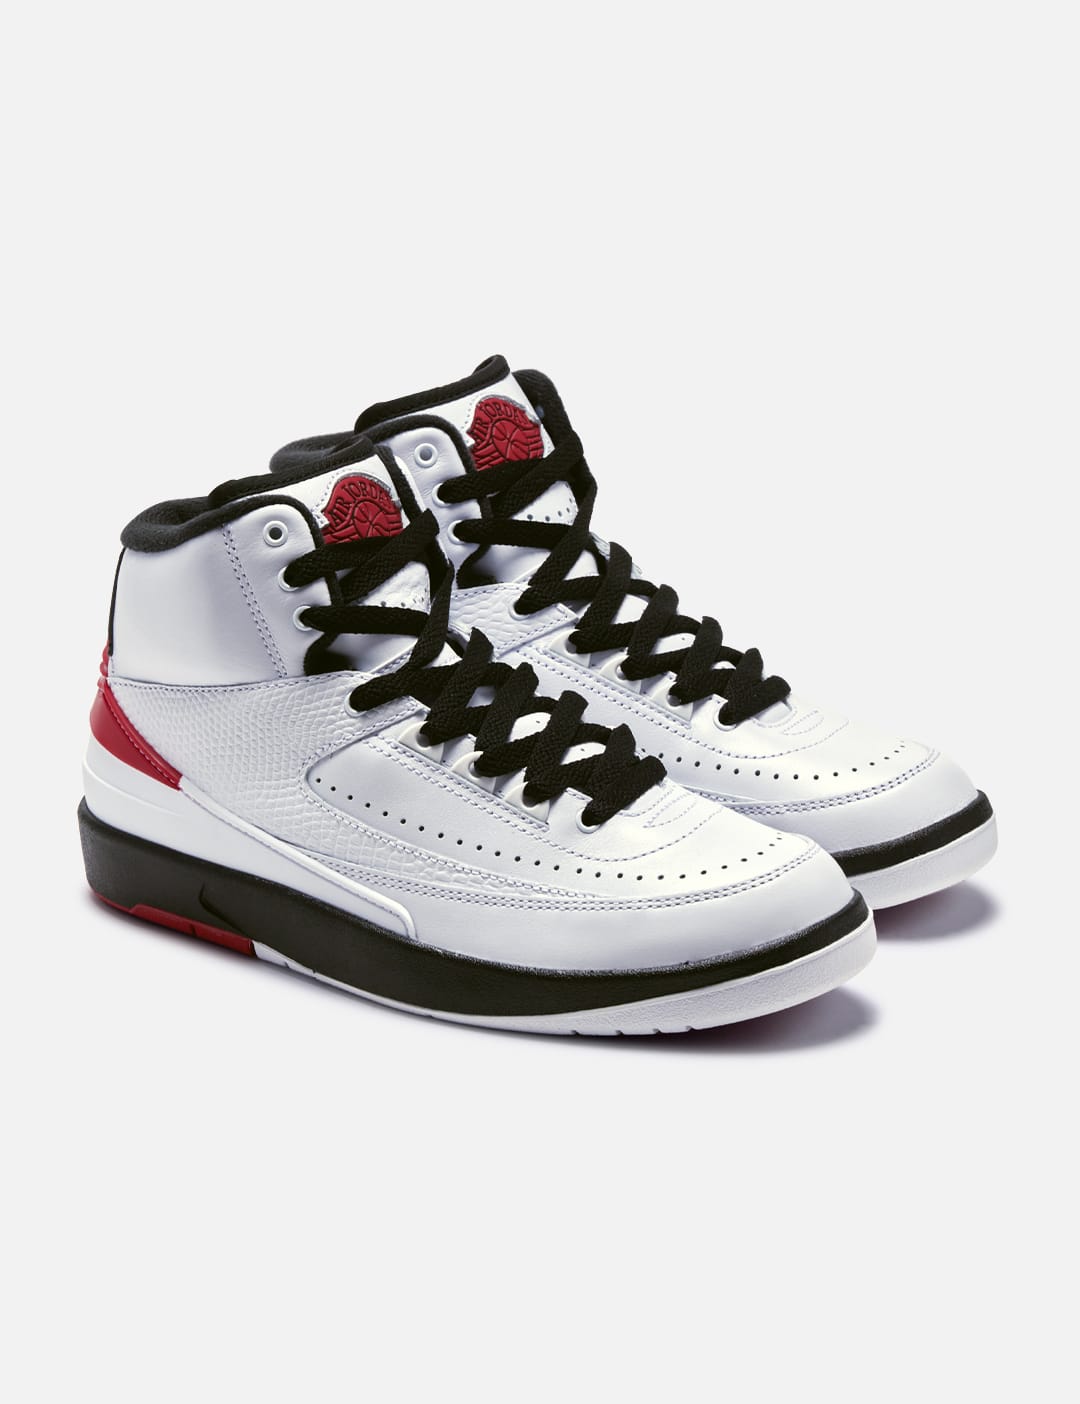 Jordan Brand - Air Jordan 2 Retro Chicago | HBX - Globally Curated